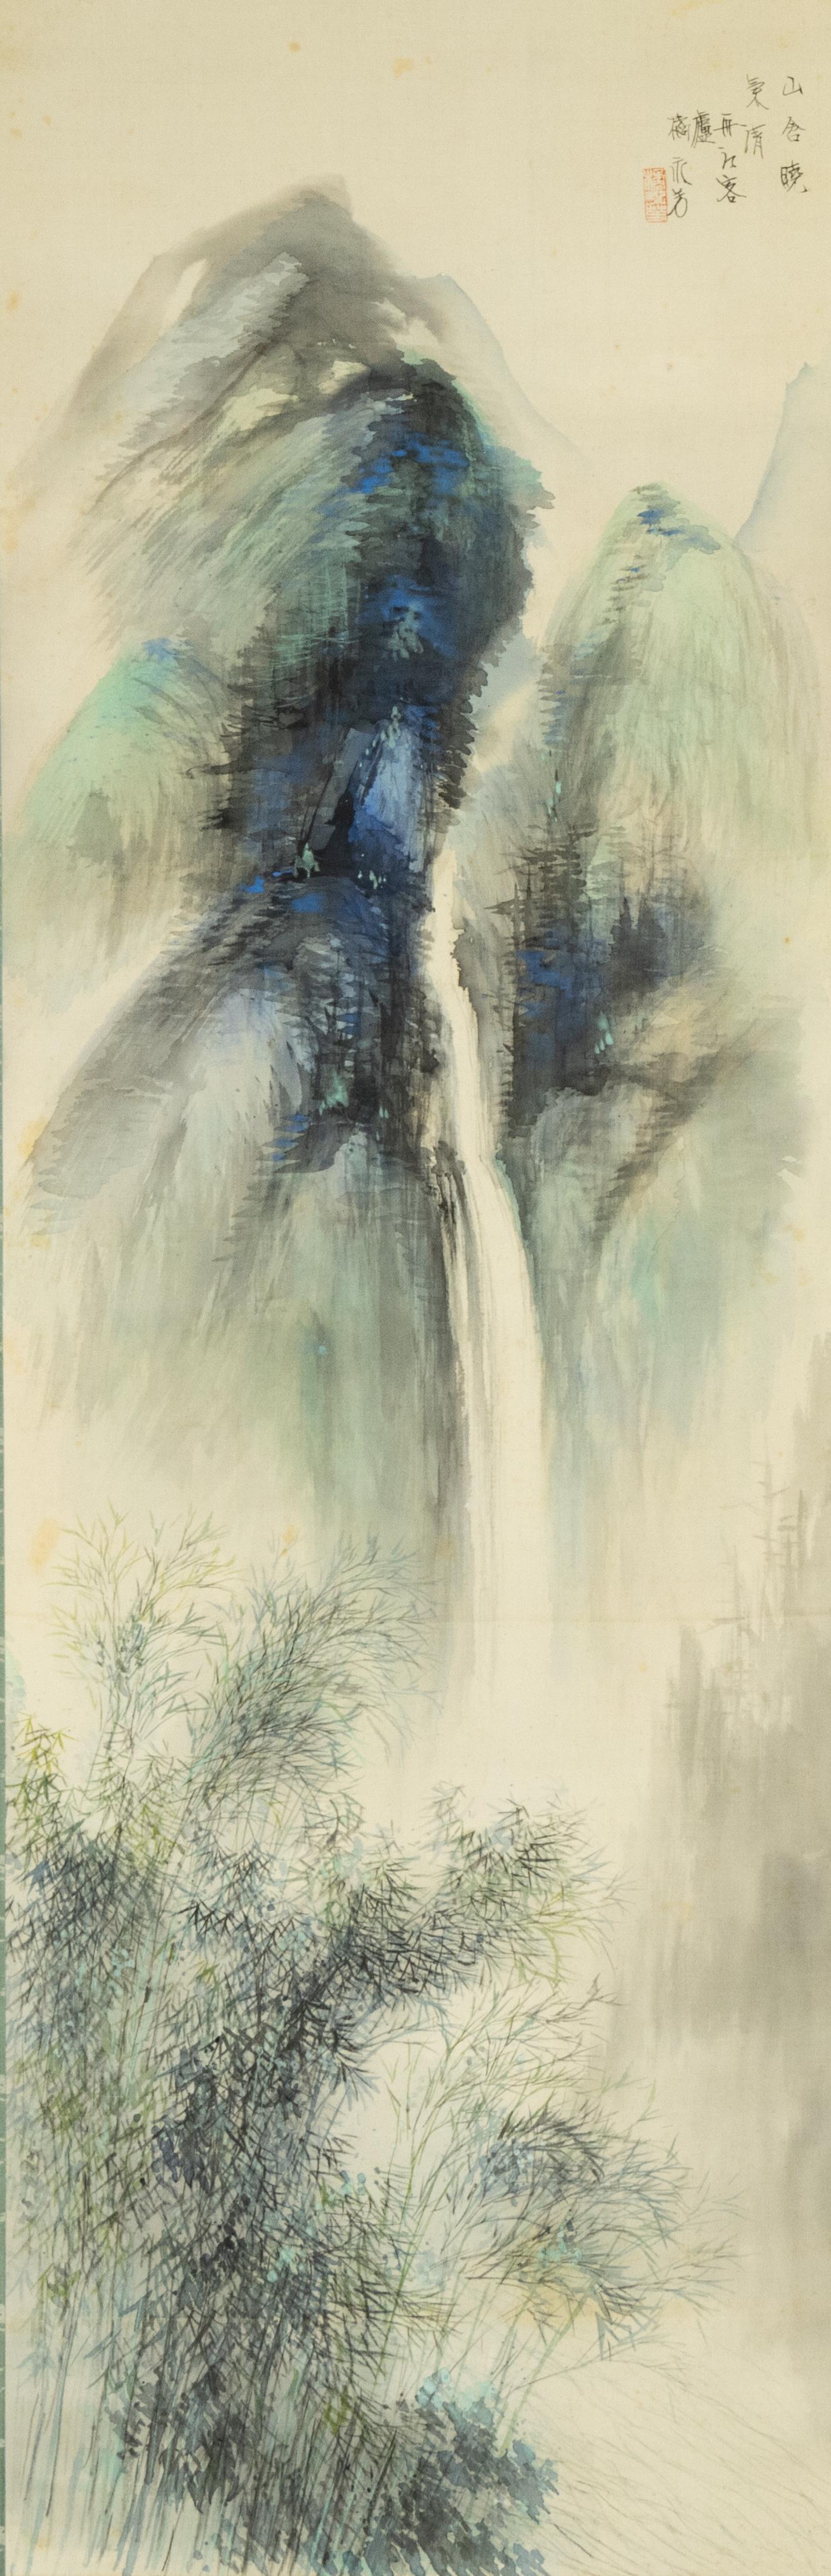 Kitsuda Eihô (1902 - 1974) Aanbreken van de dag in de bergen

Rolschildering / scroll op zijde, houten rollers, in houten cassette. Herkomst: Oranda Jin. B 128 x 41.9 / 202 x 56.3 cm
128 x 41.9 / 202 x 56.3 cm